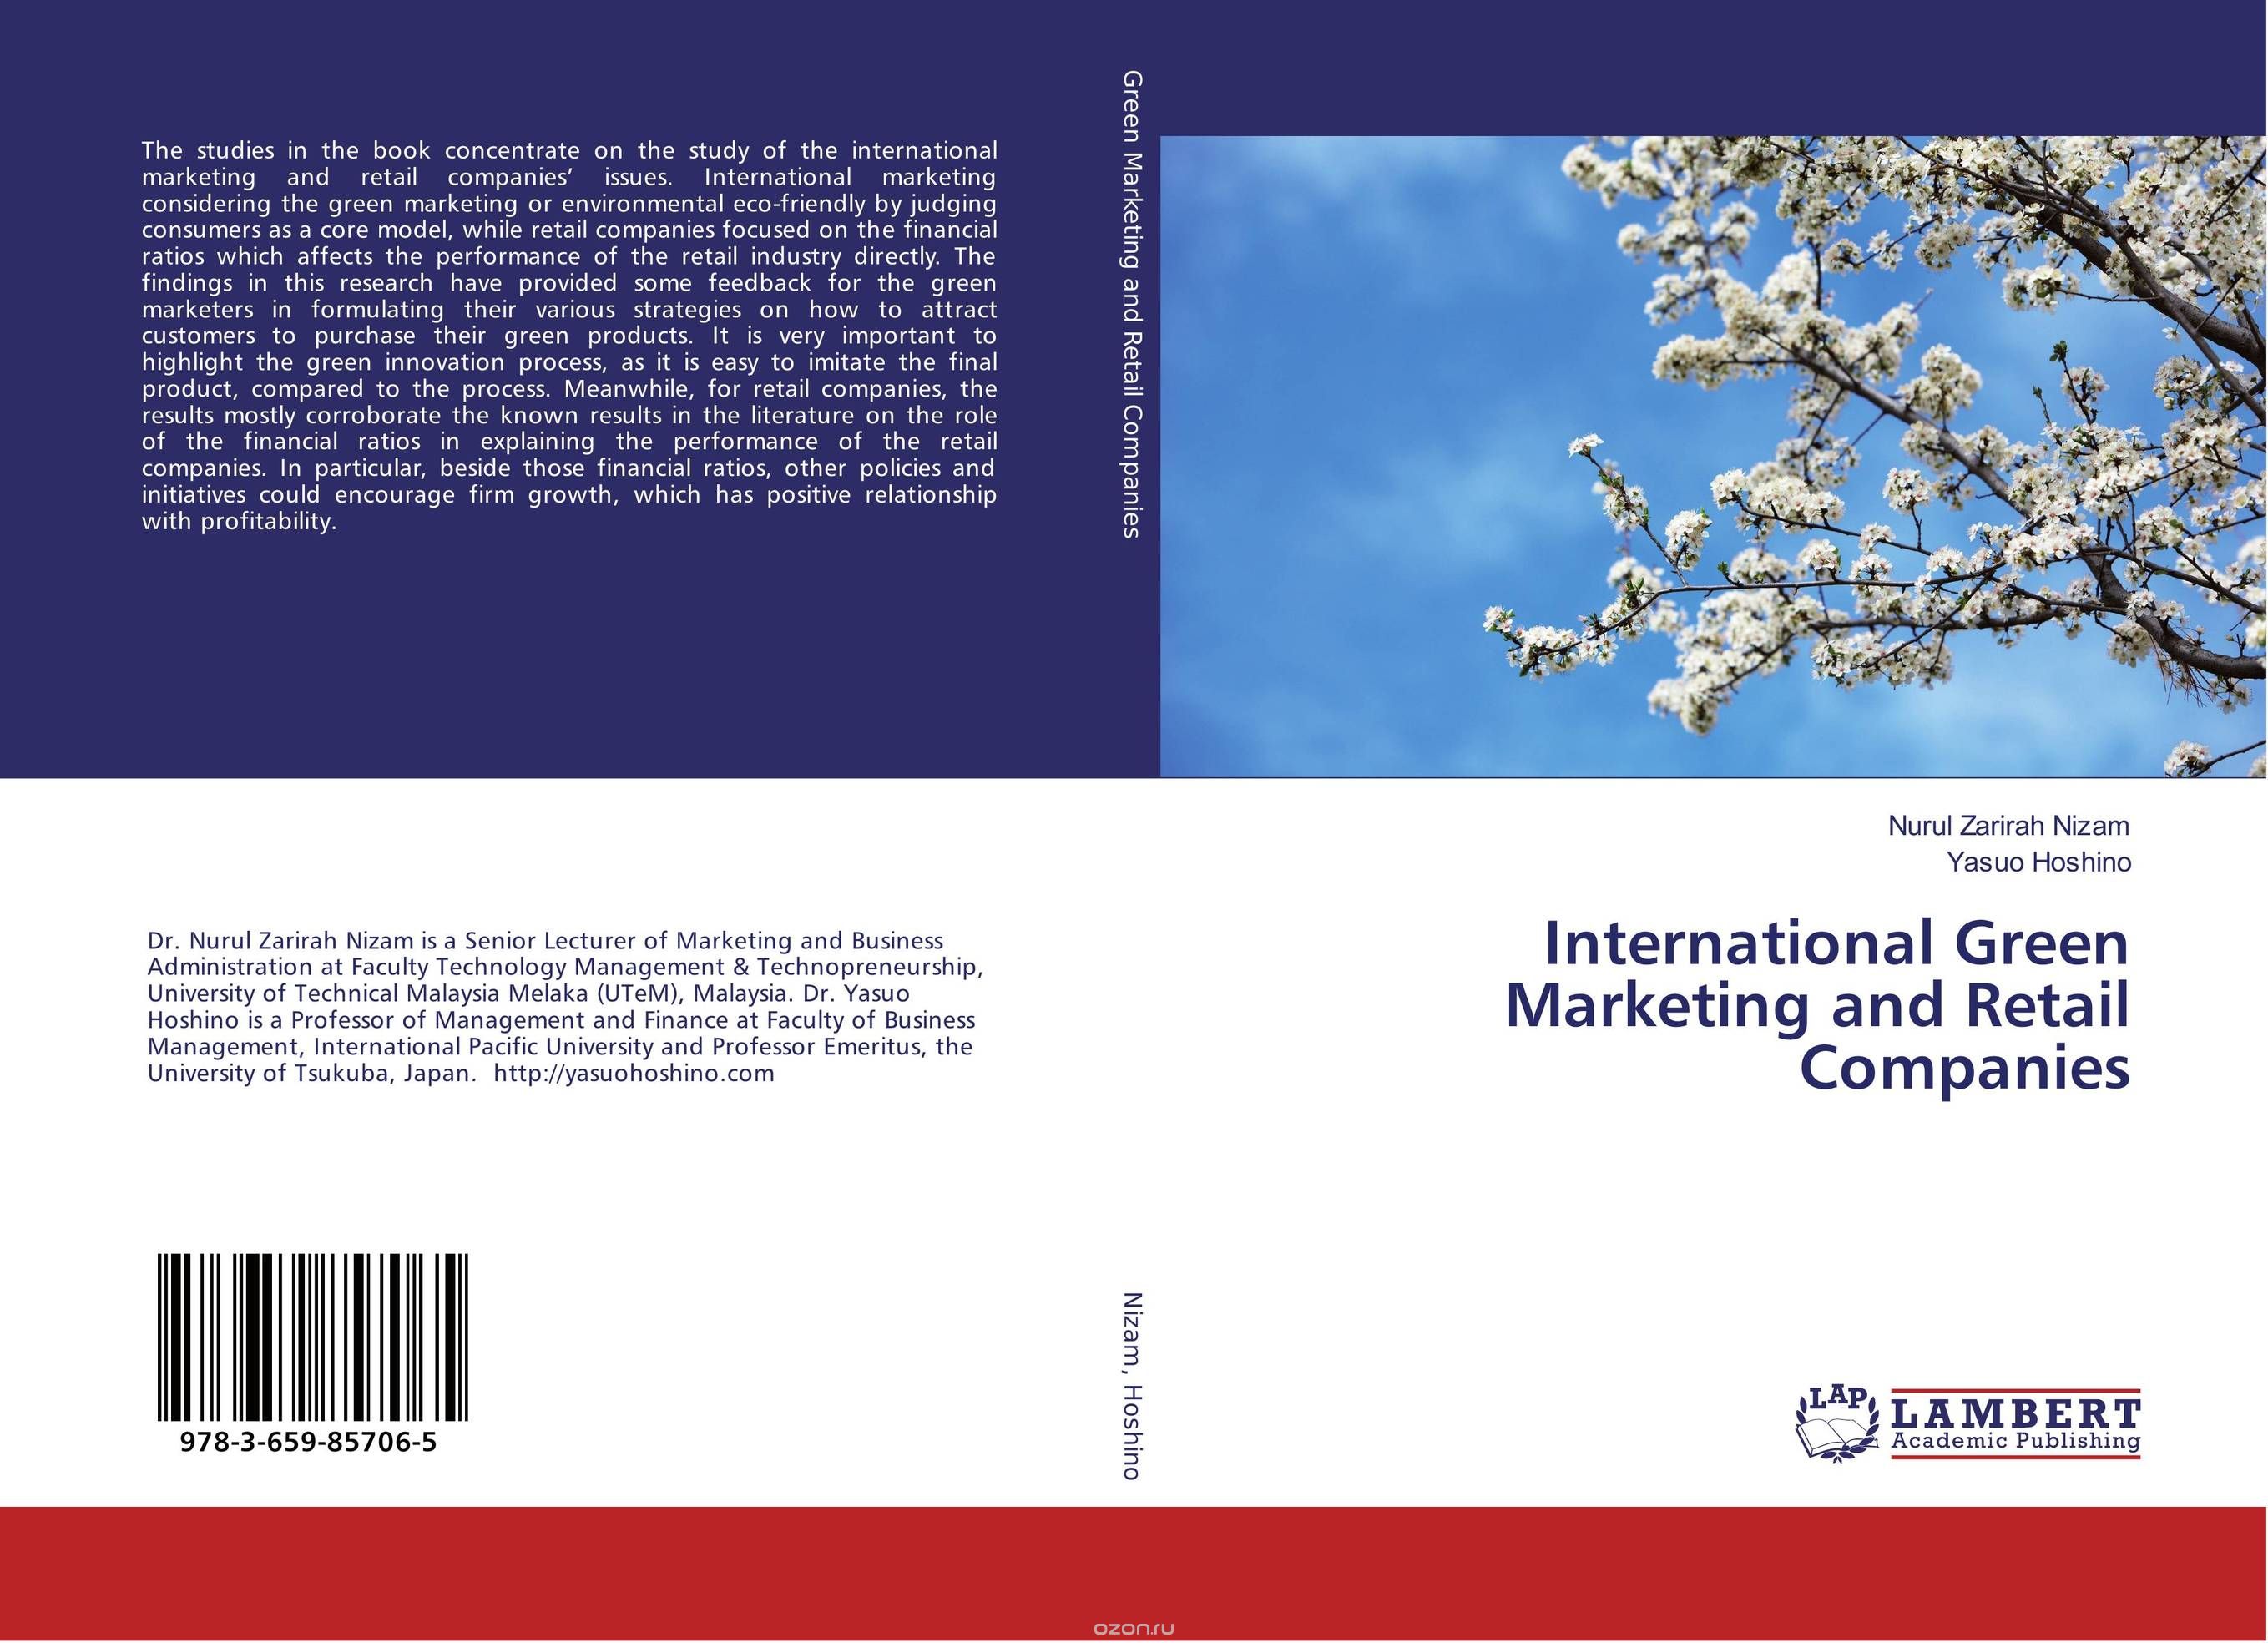 Скачать книгу "International Green Marketing and Retail Companies"